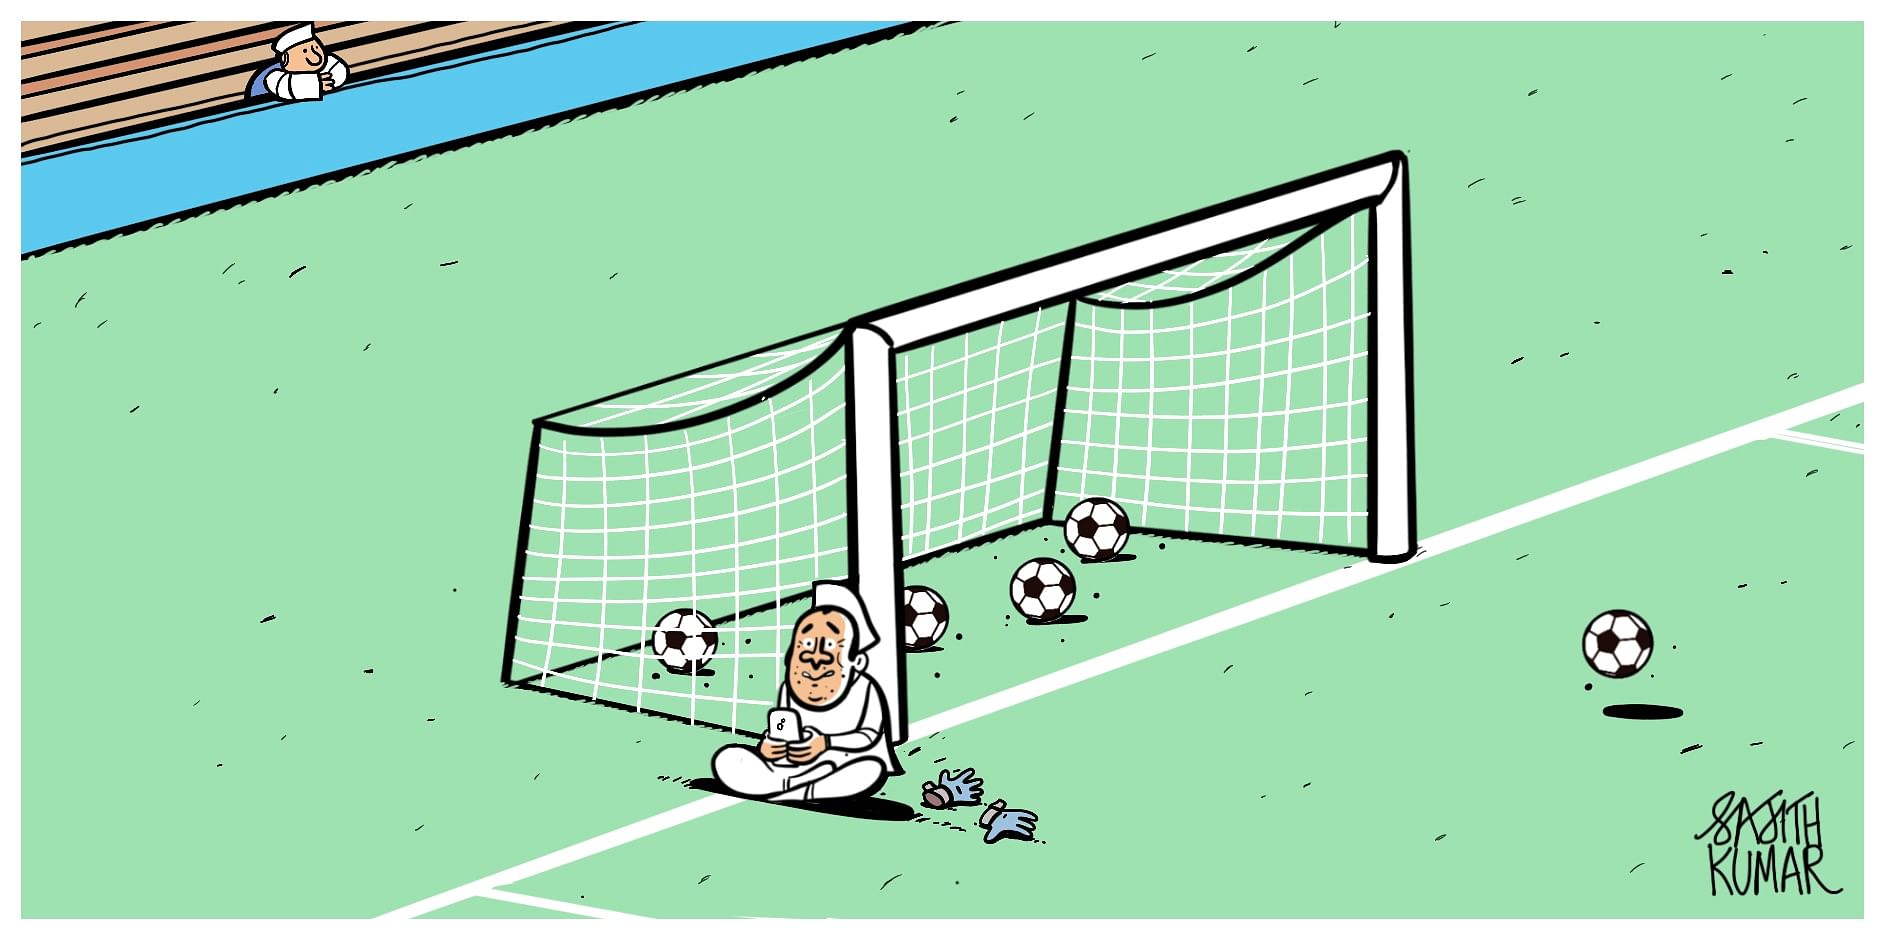 Cartoon by Sajith Kumar